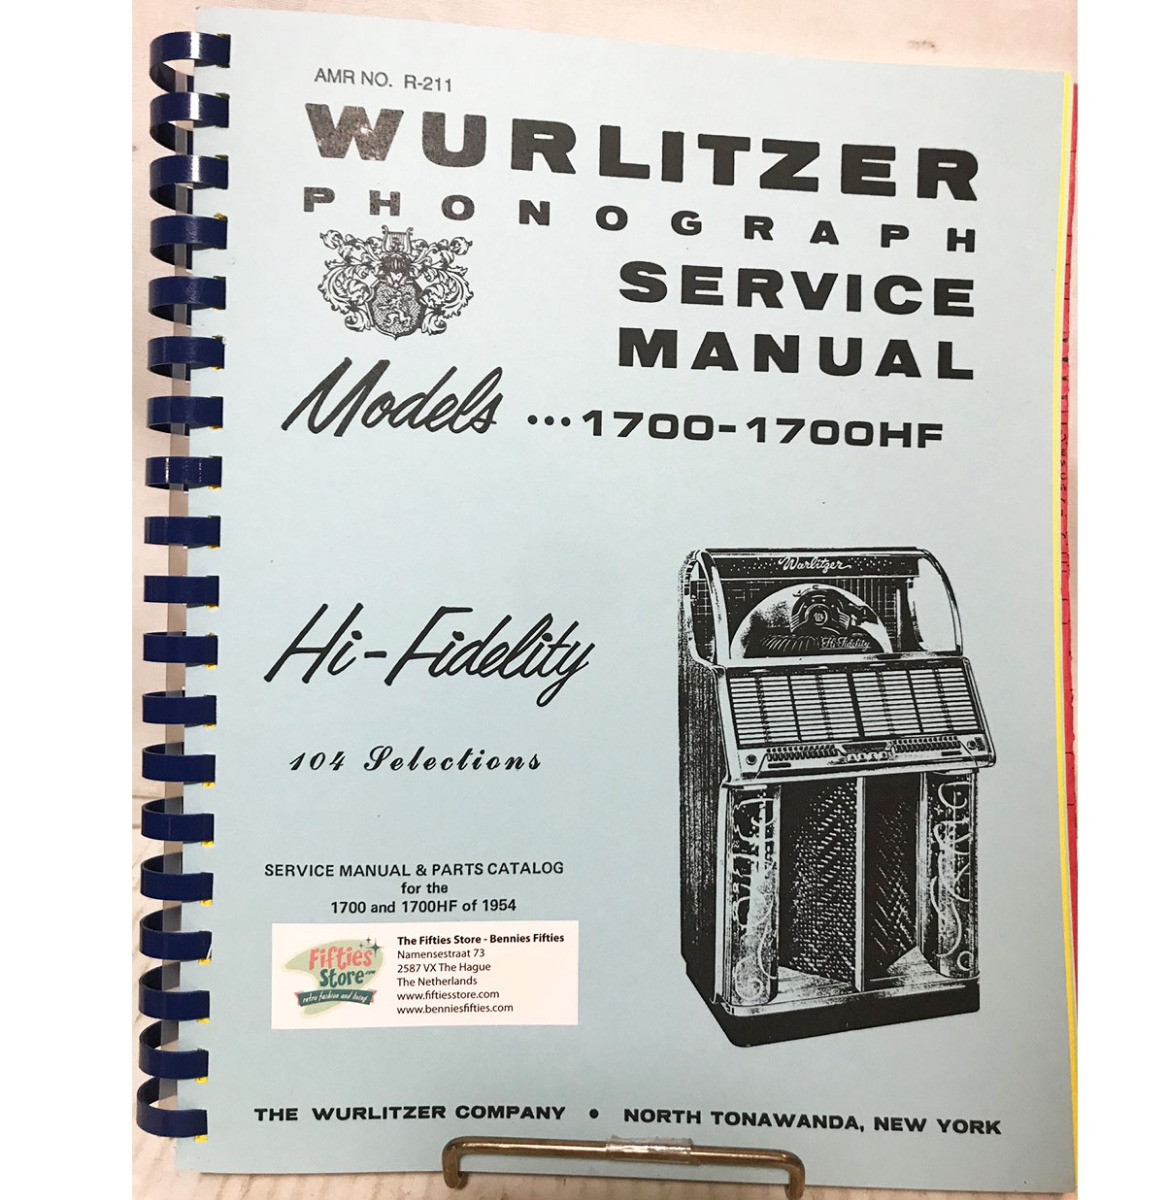 Service Manual - Wurlitzer Jukebox Model 1700-1700HF